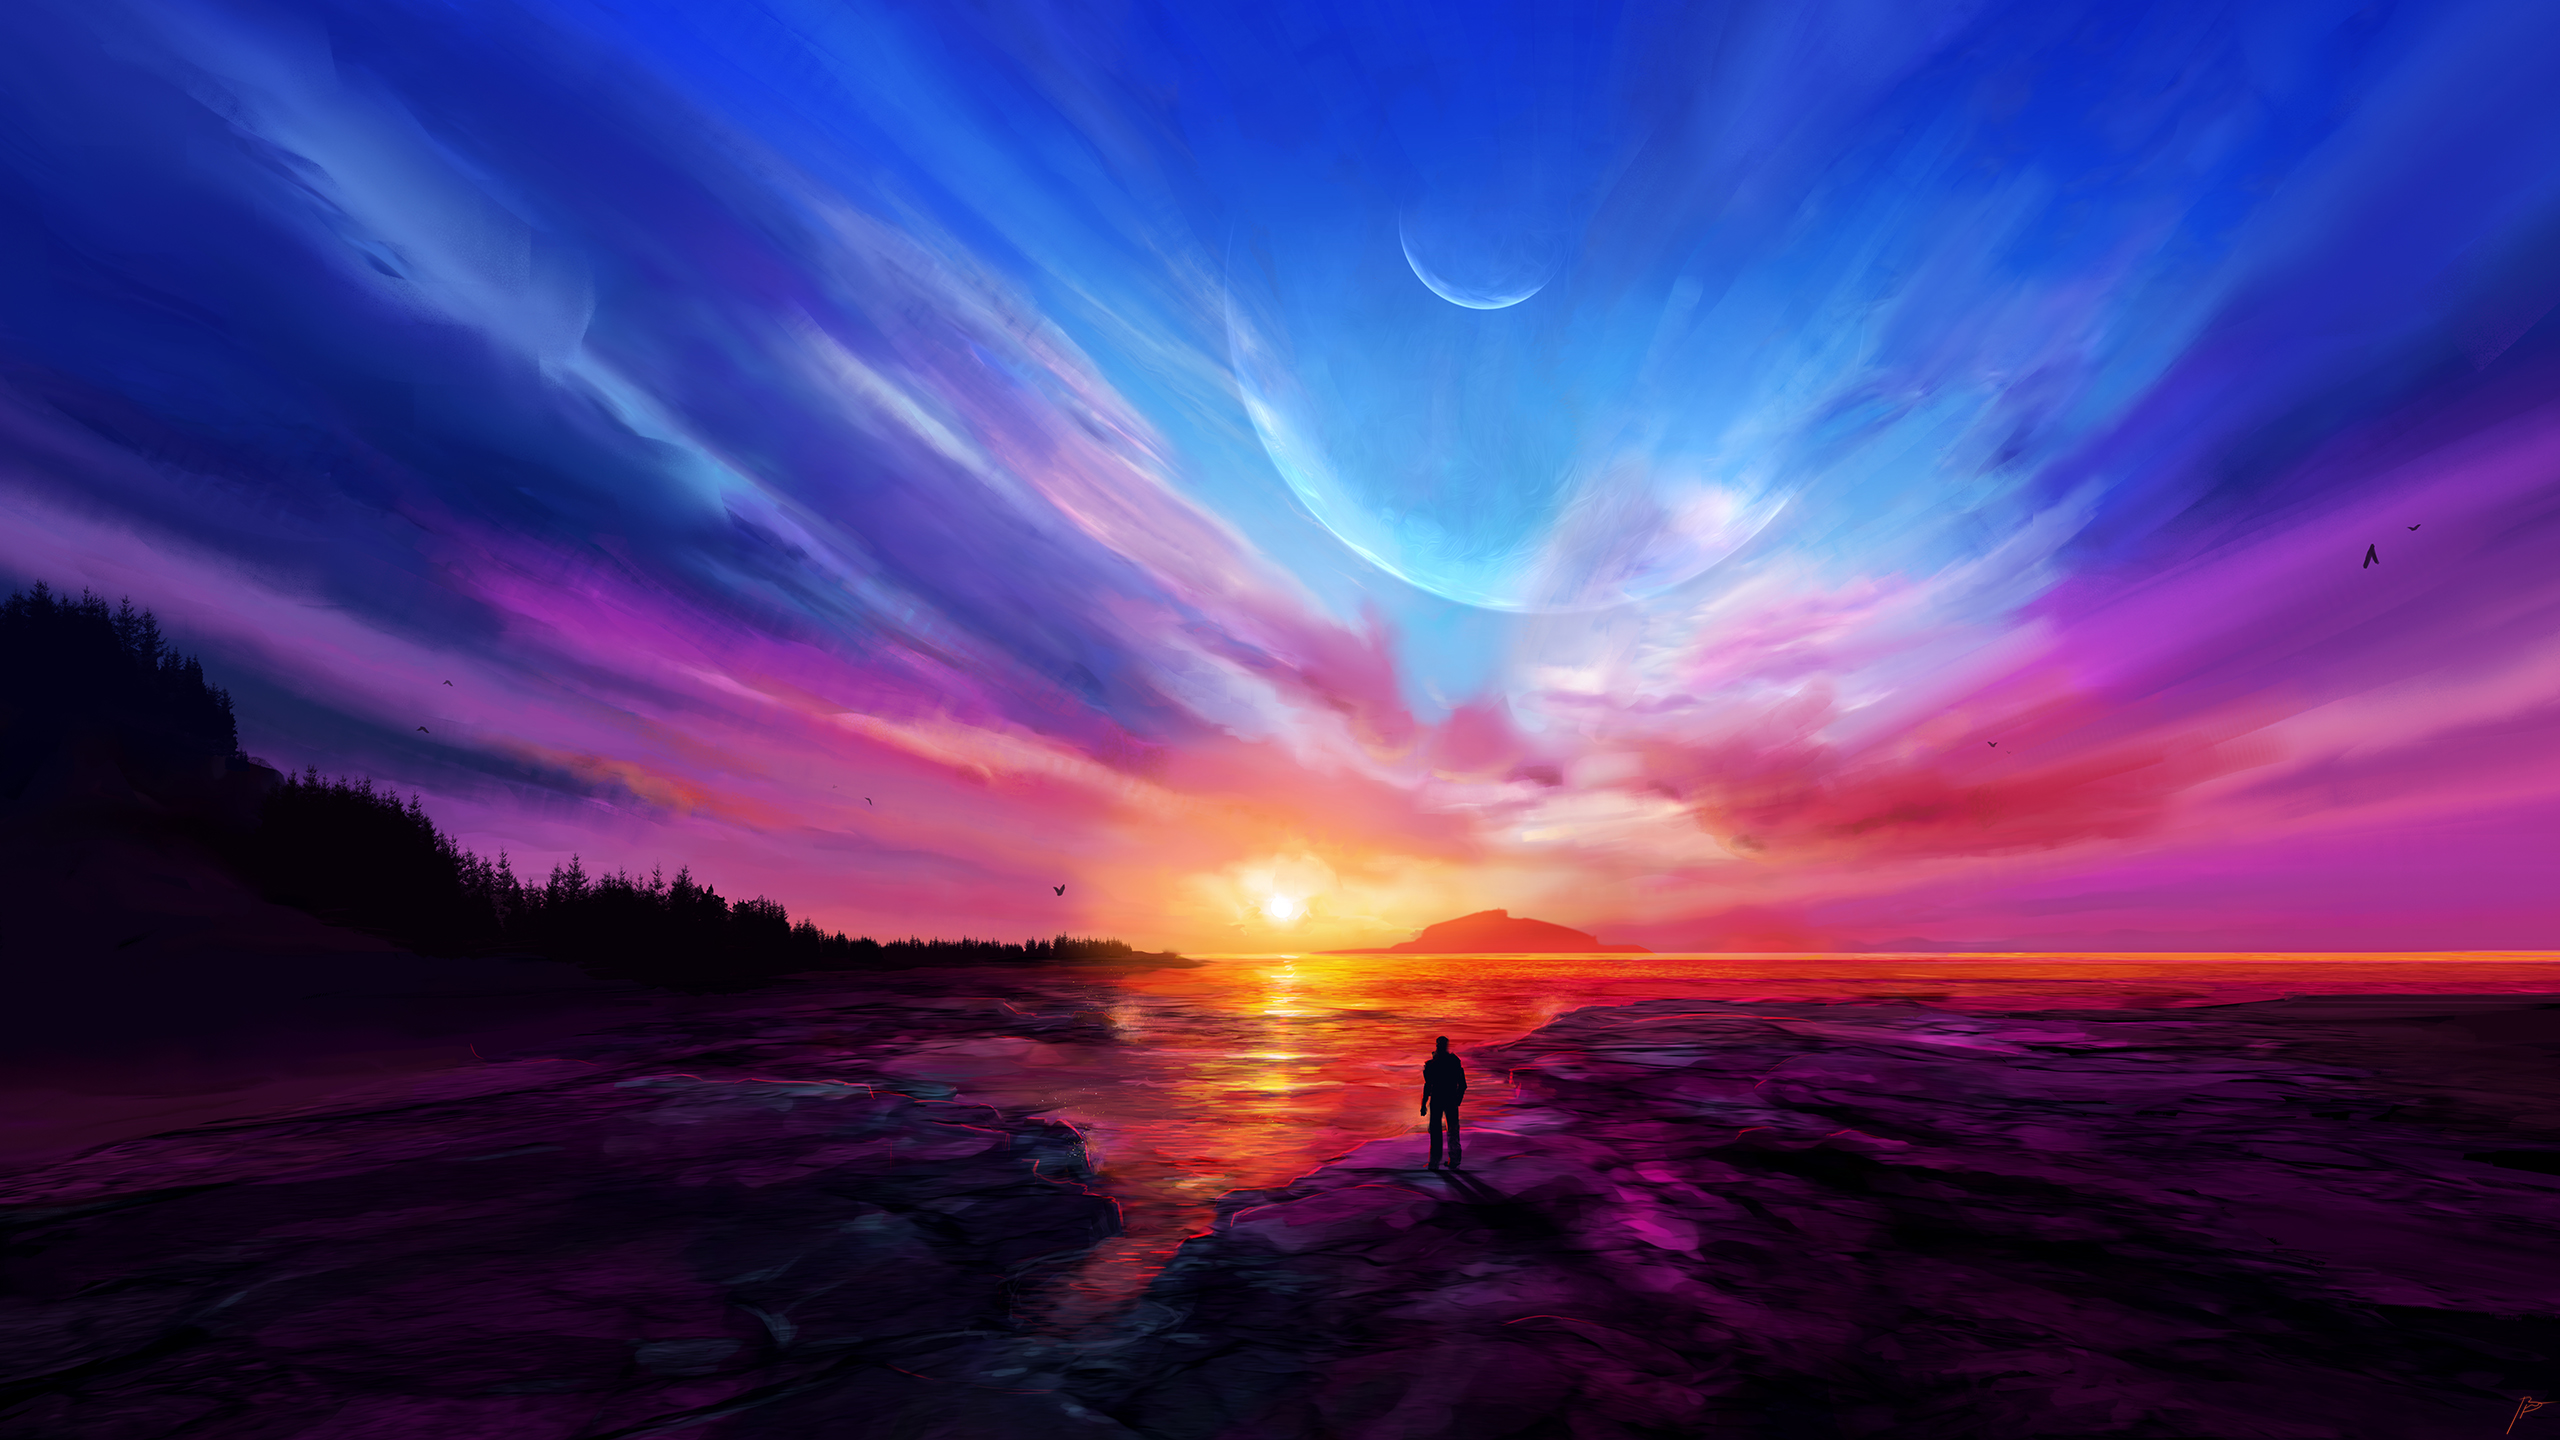 General 2560x1440 JoeyJazz landscape sunset digital painting